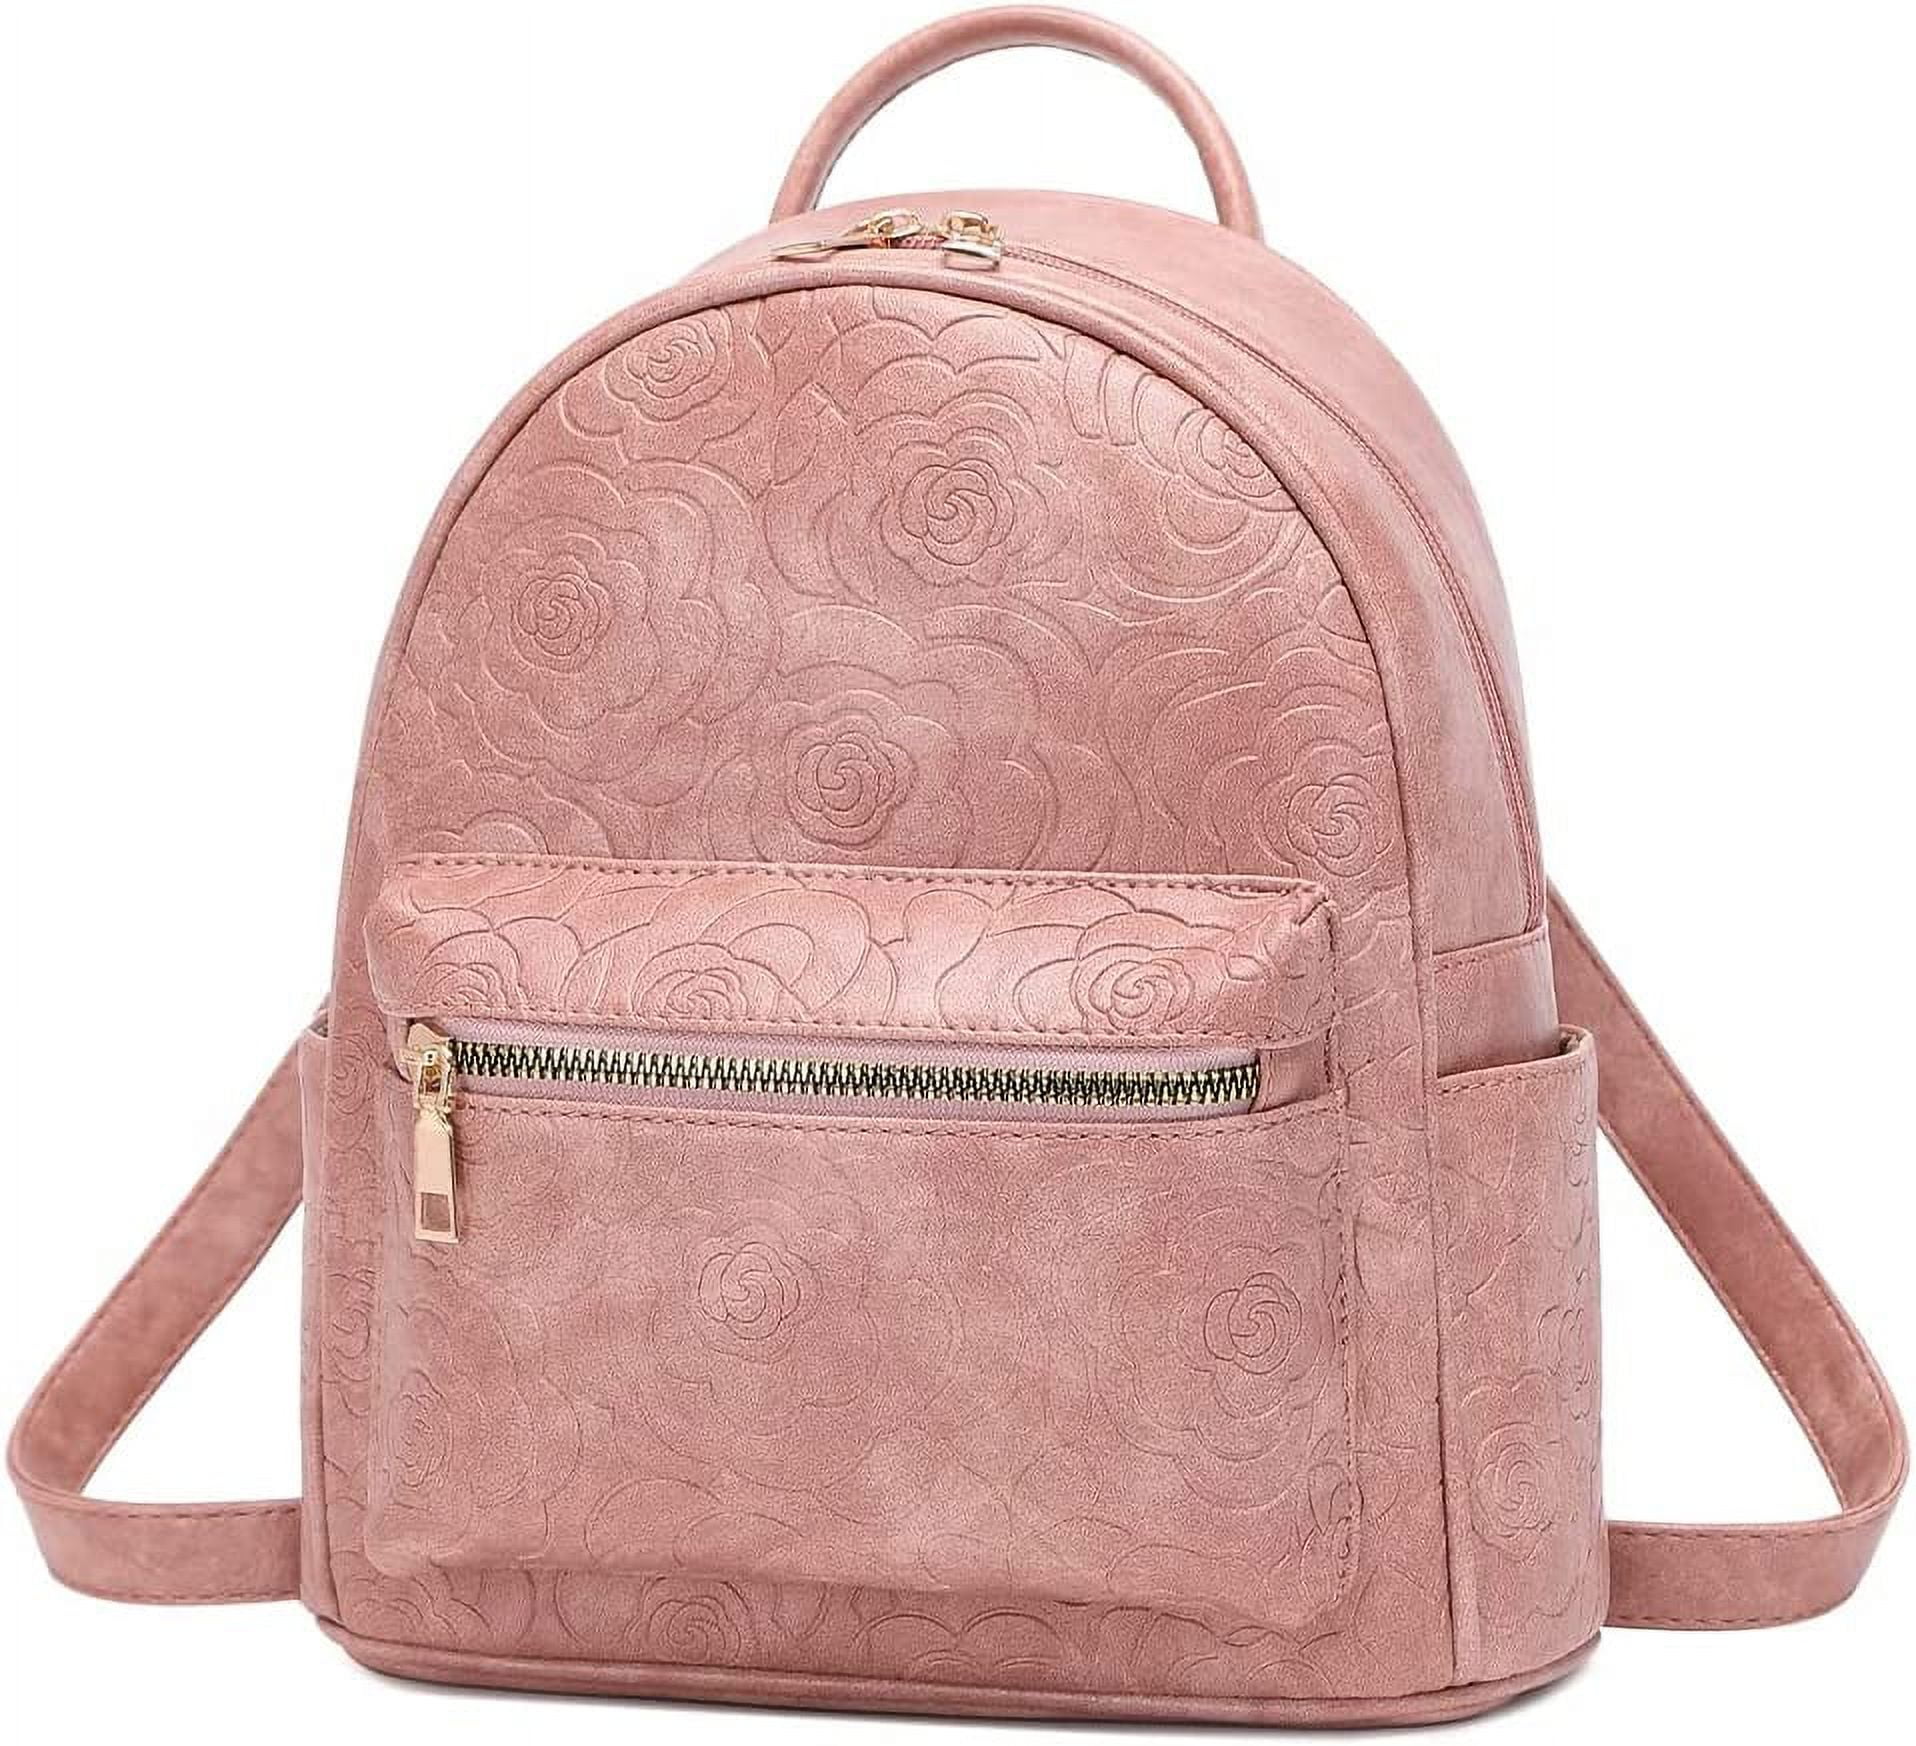 Backpacks for Women Fashion PU Leather Bag Multipurpose Design Convertible  Satchel Bag Travel Backpack Handbag